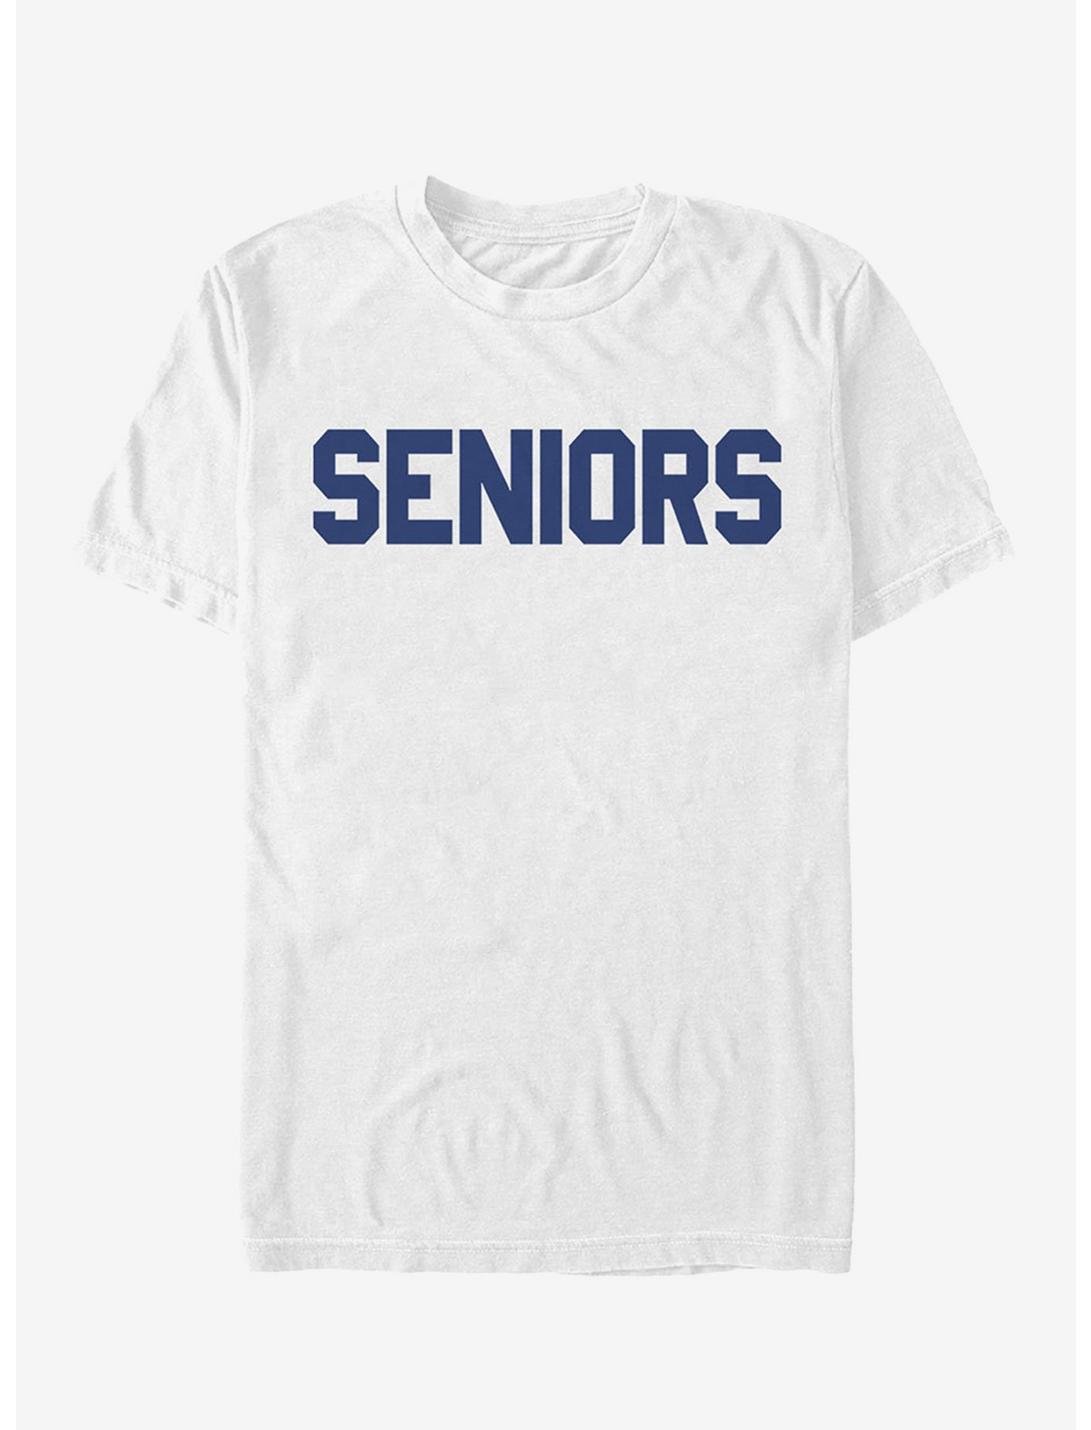 Dazed and Confused Seniors T-Shirt, WHITE, hi-res